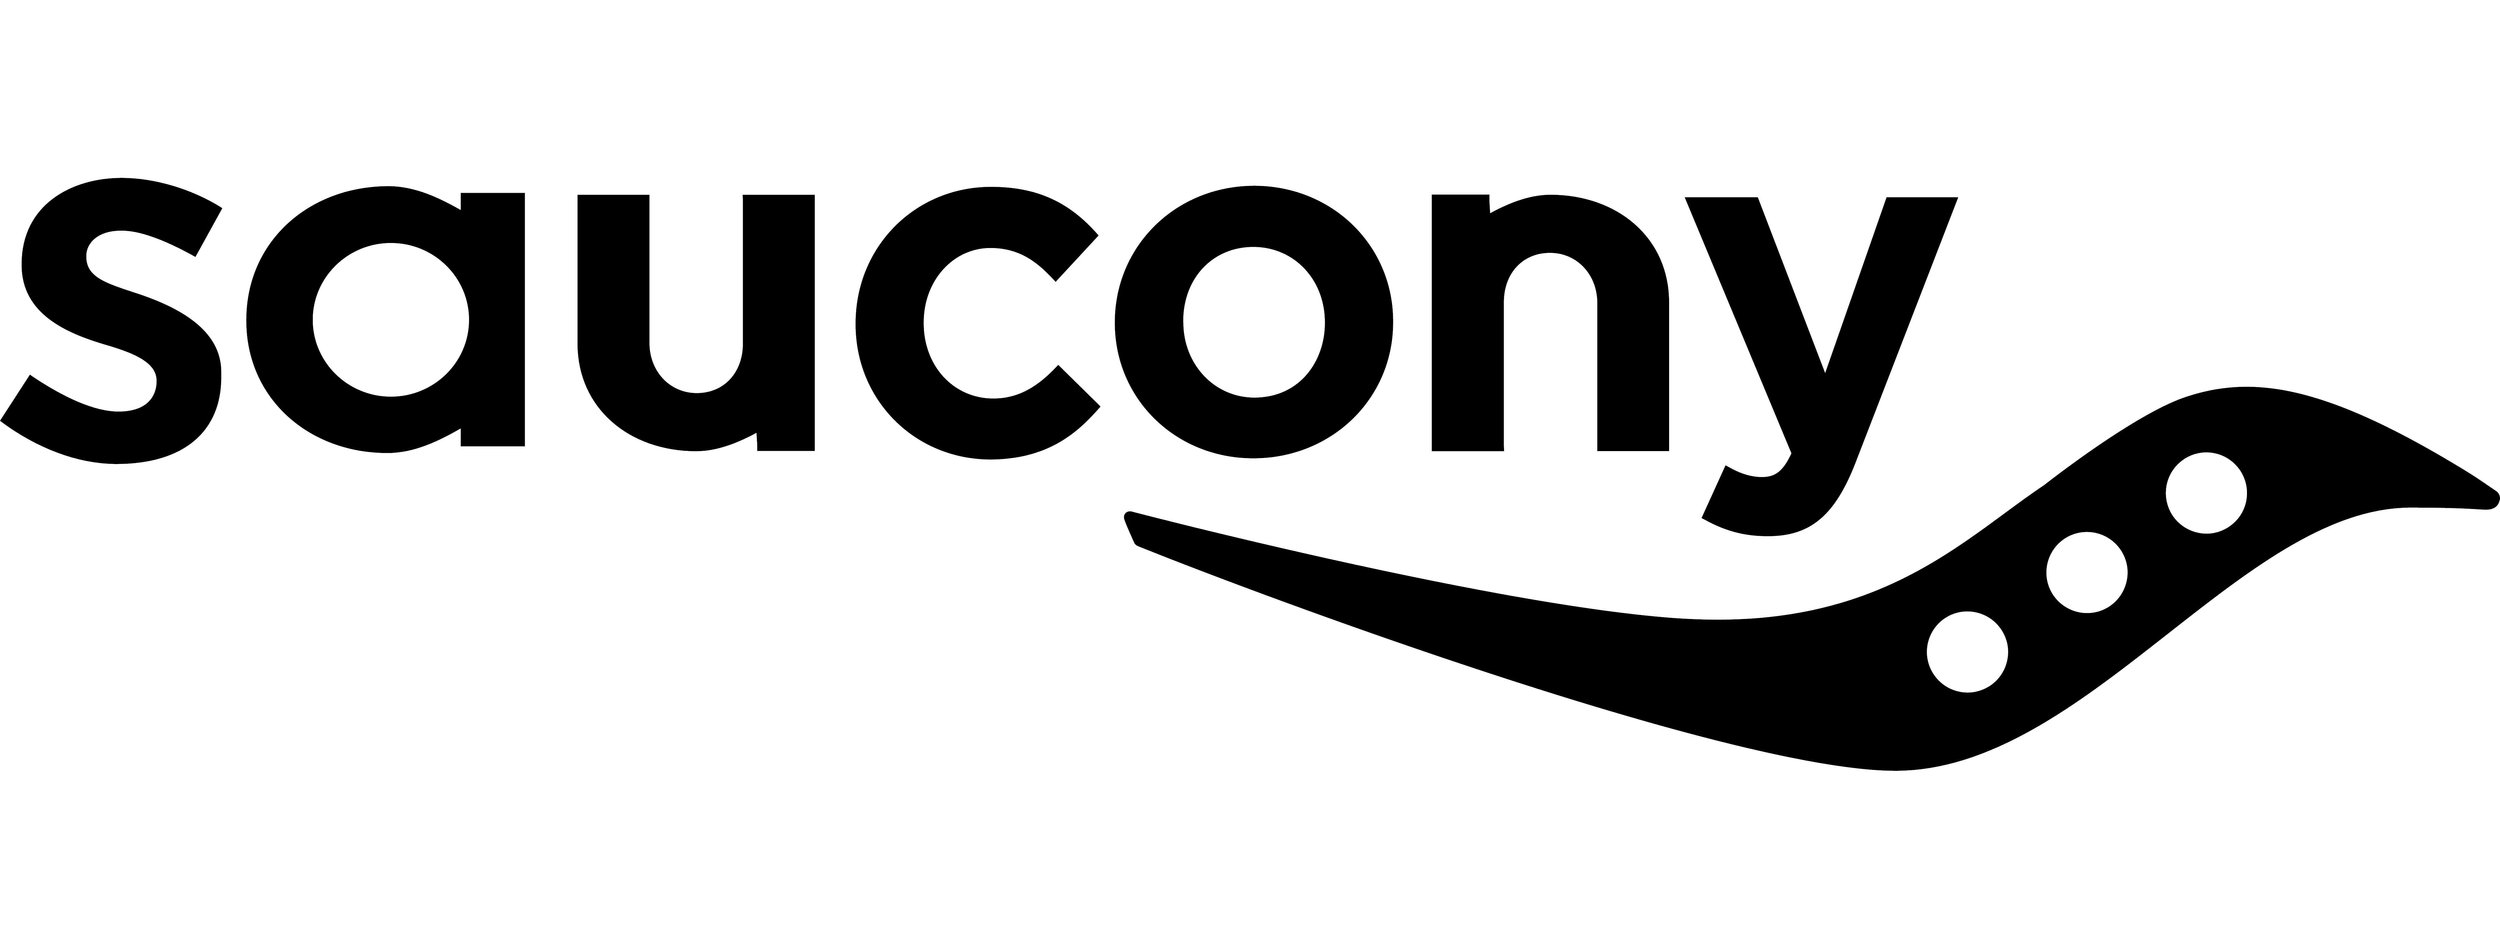 Saucony-logo.jpg